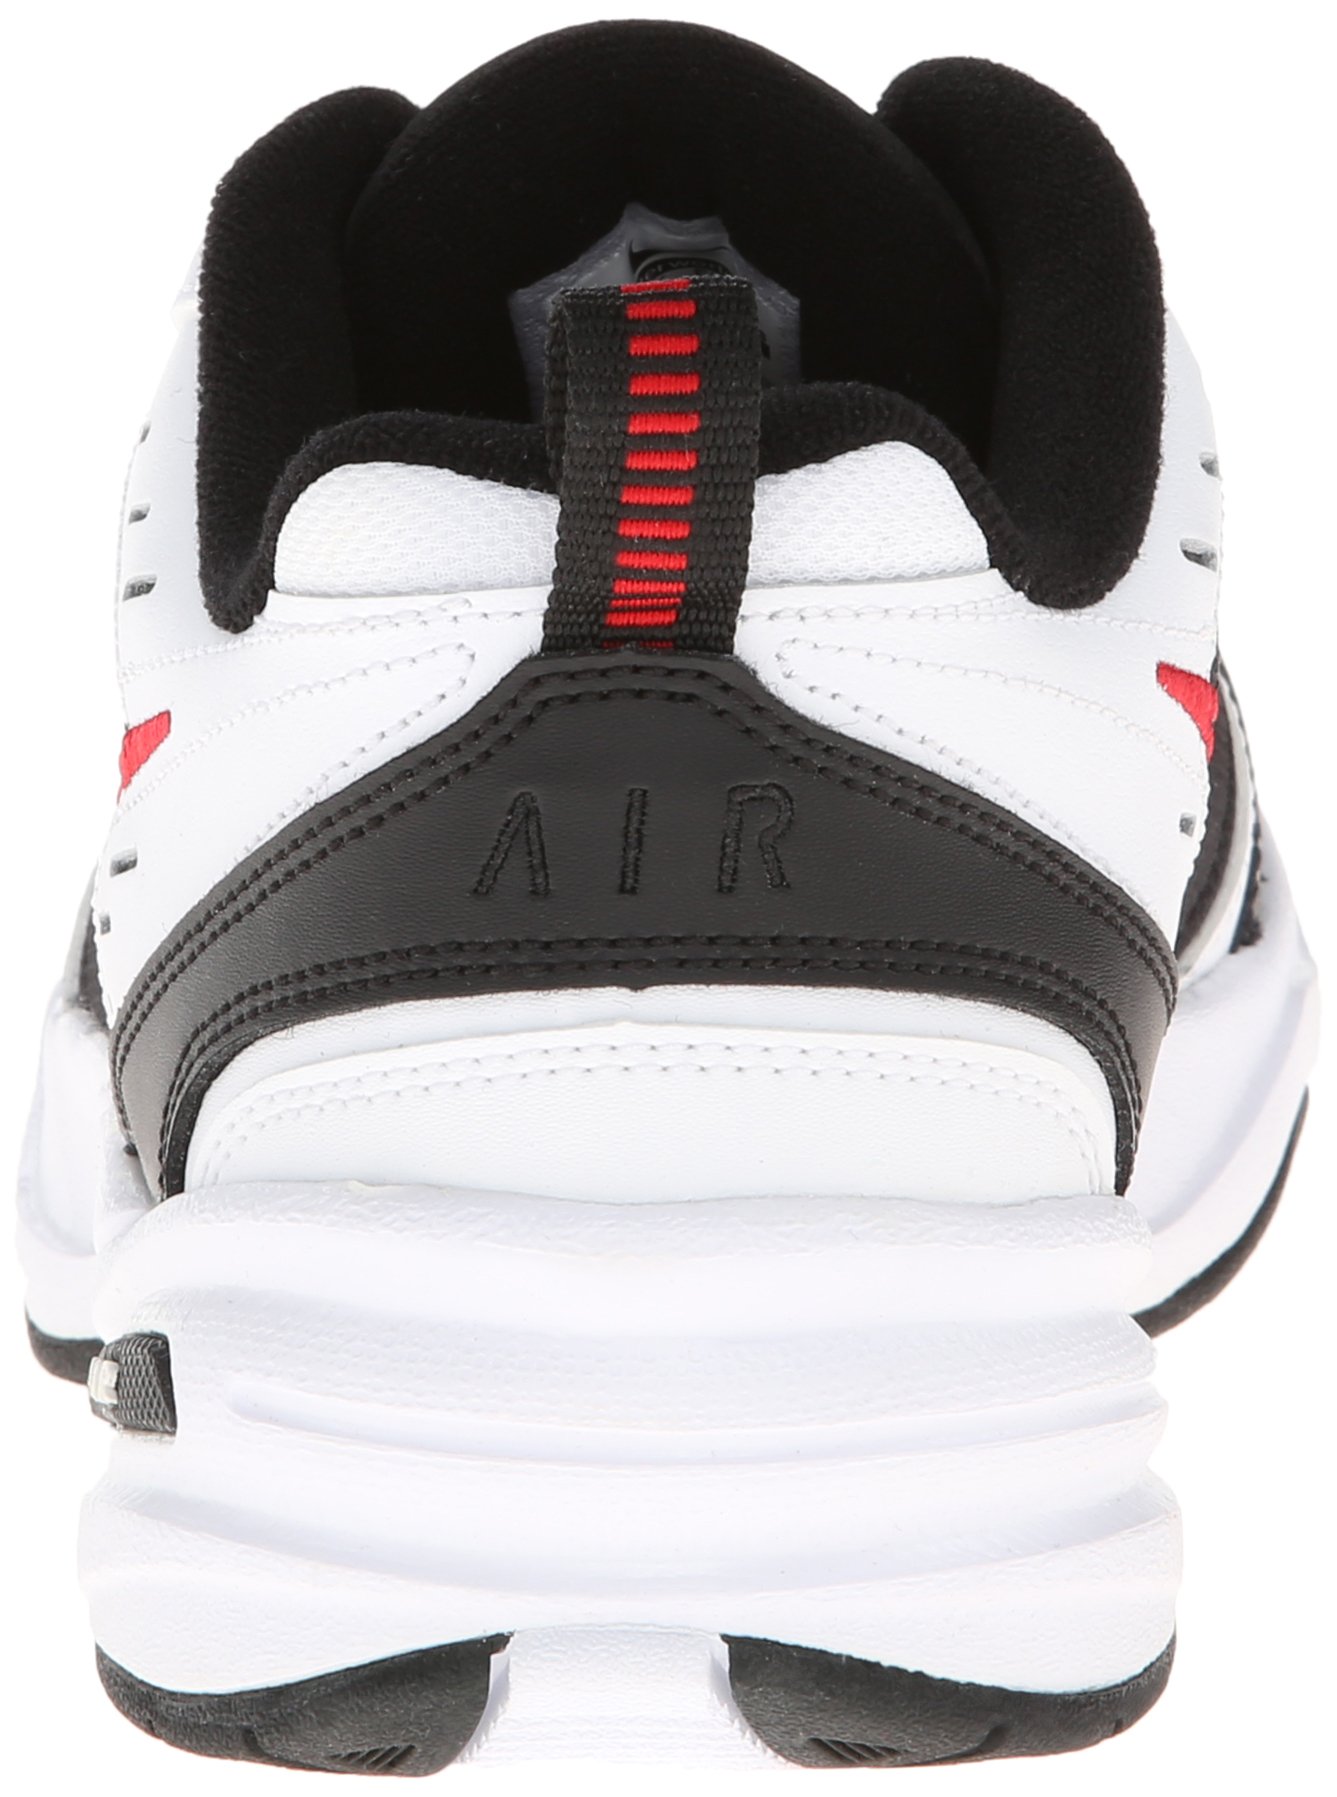 Nike Men's Air Monarch IV Training Shoe - image 3 of 8